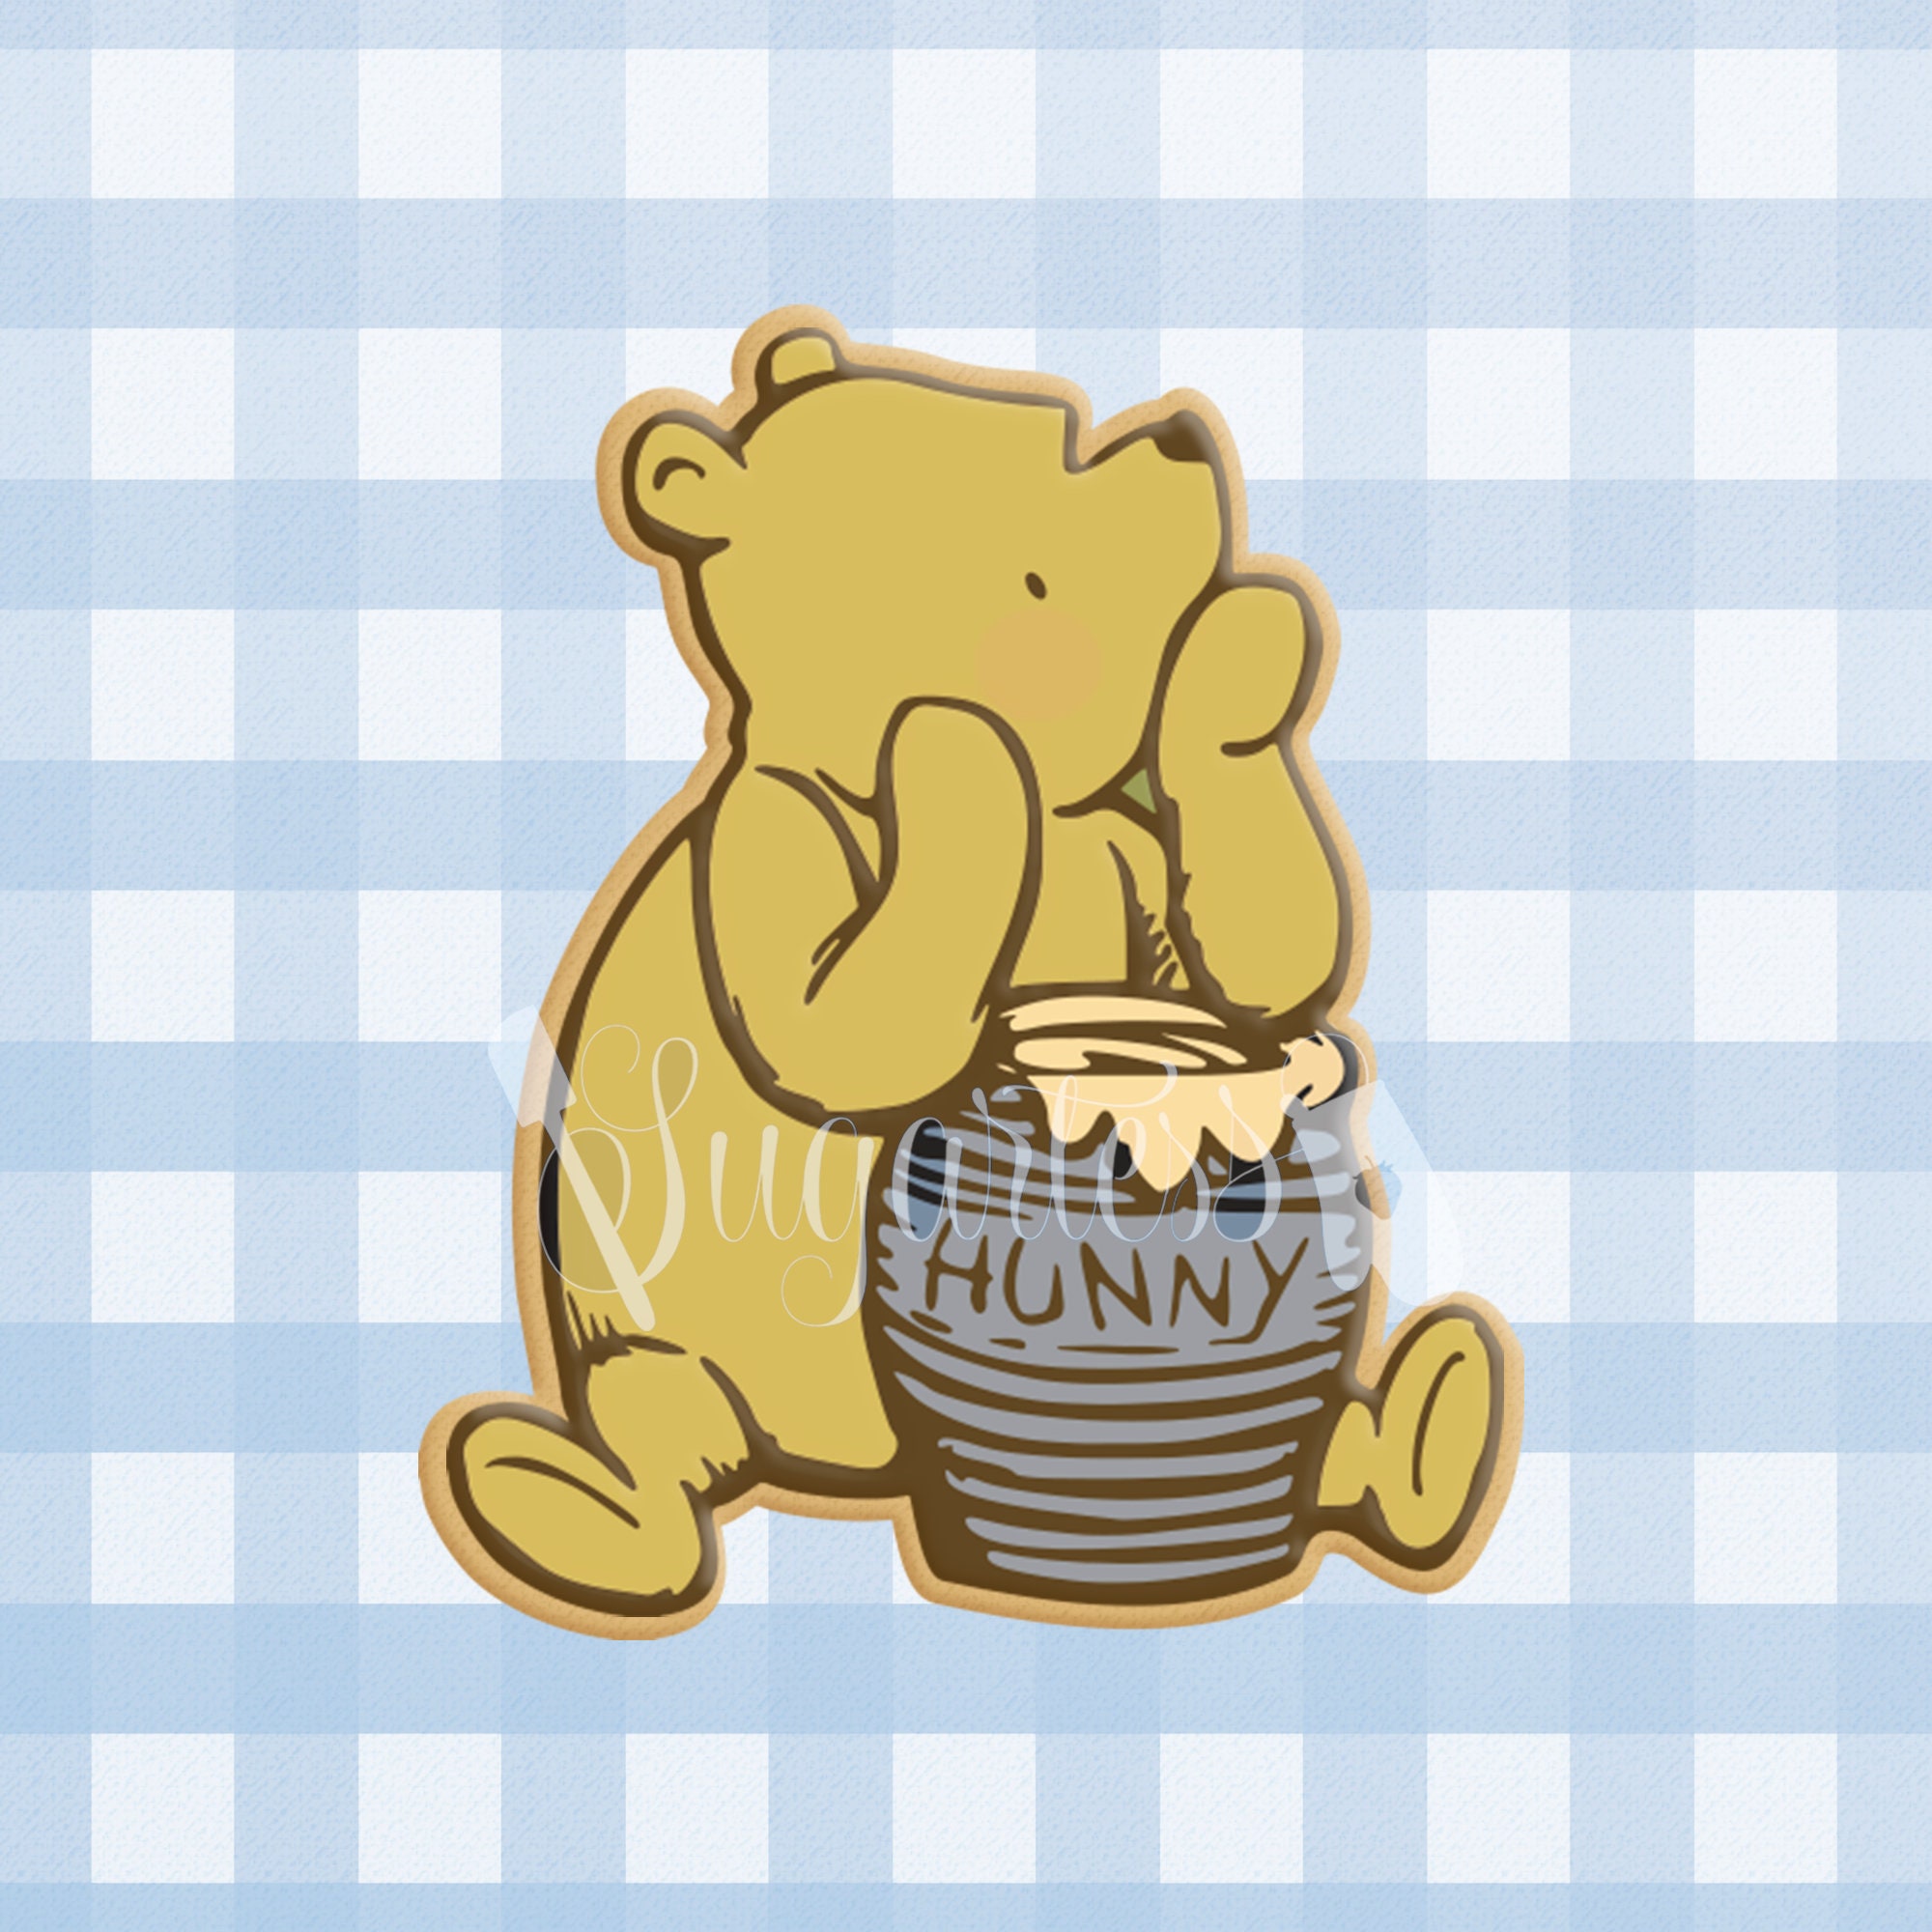 Winnie the Pooh - Hunny Pot 266-H055 Cookie Cutter Set